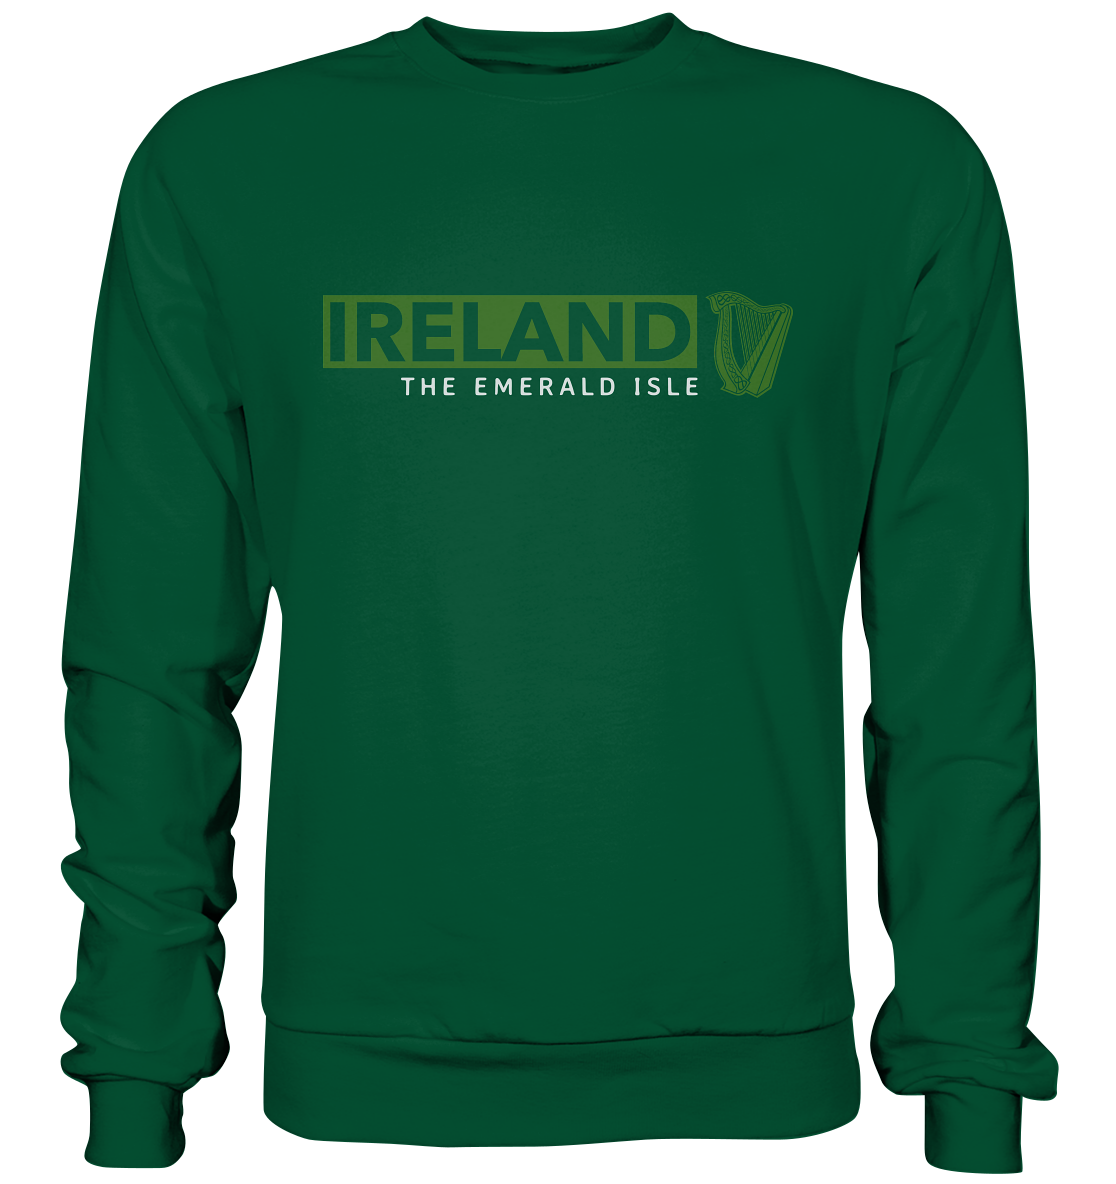 Ireland "The Emerald Isle / Harp" - Basic Sweatshirt